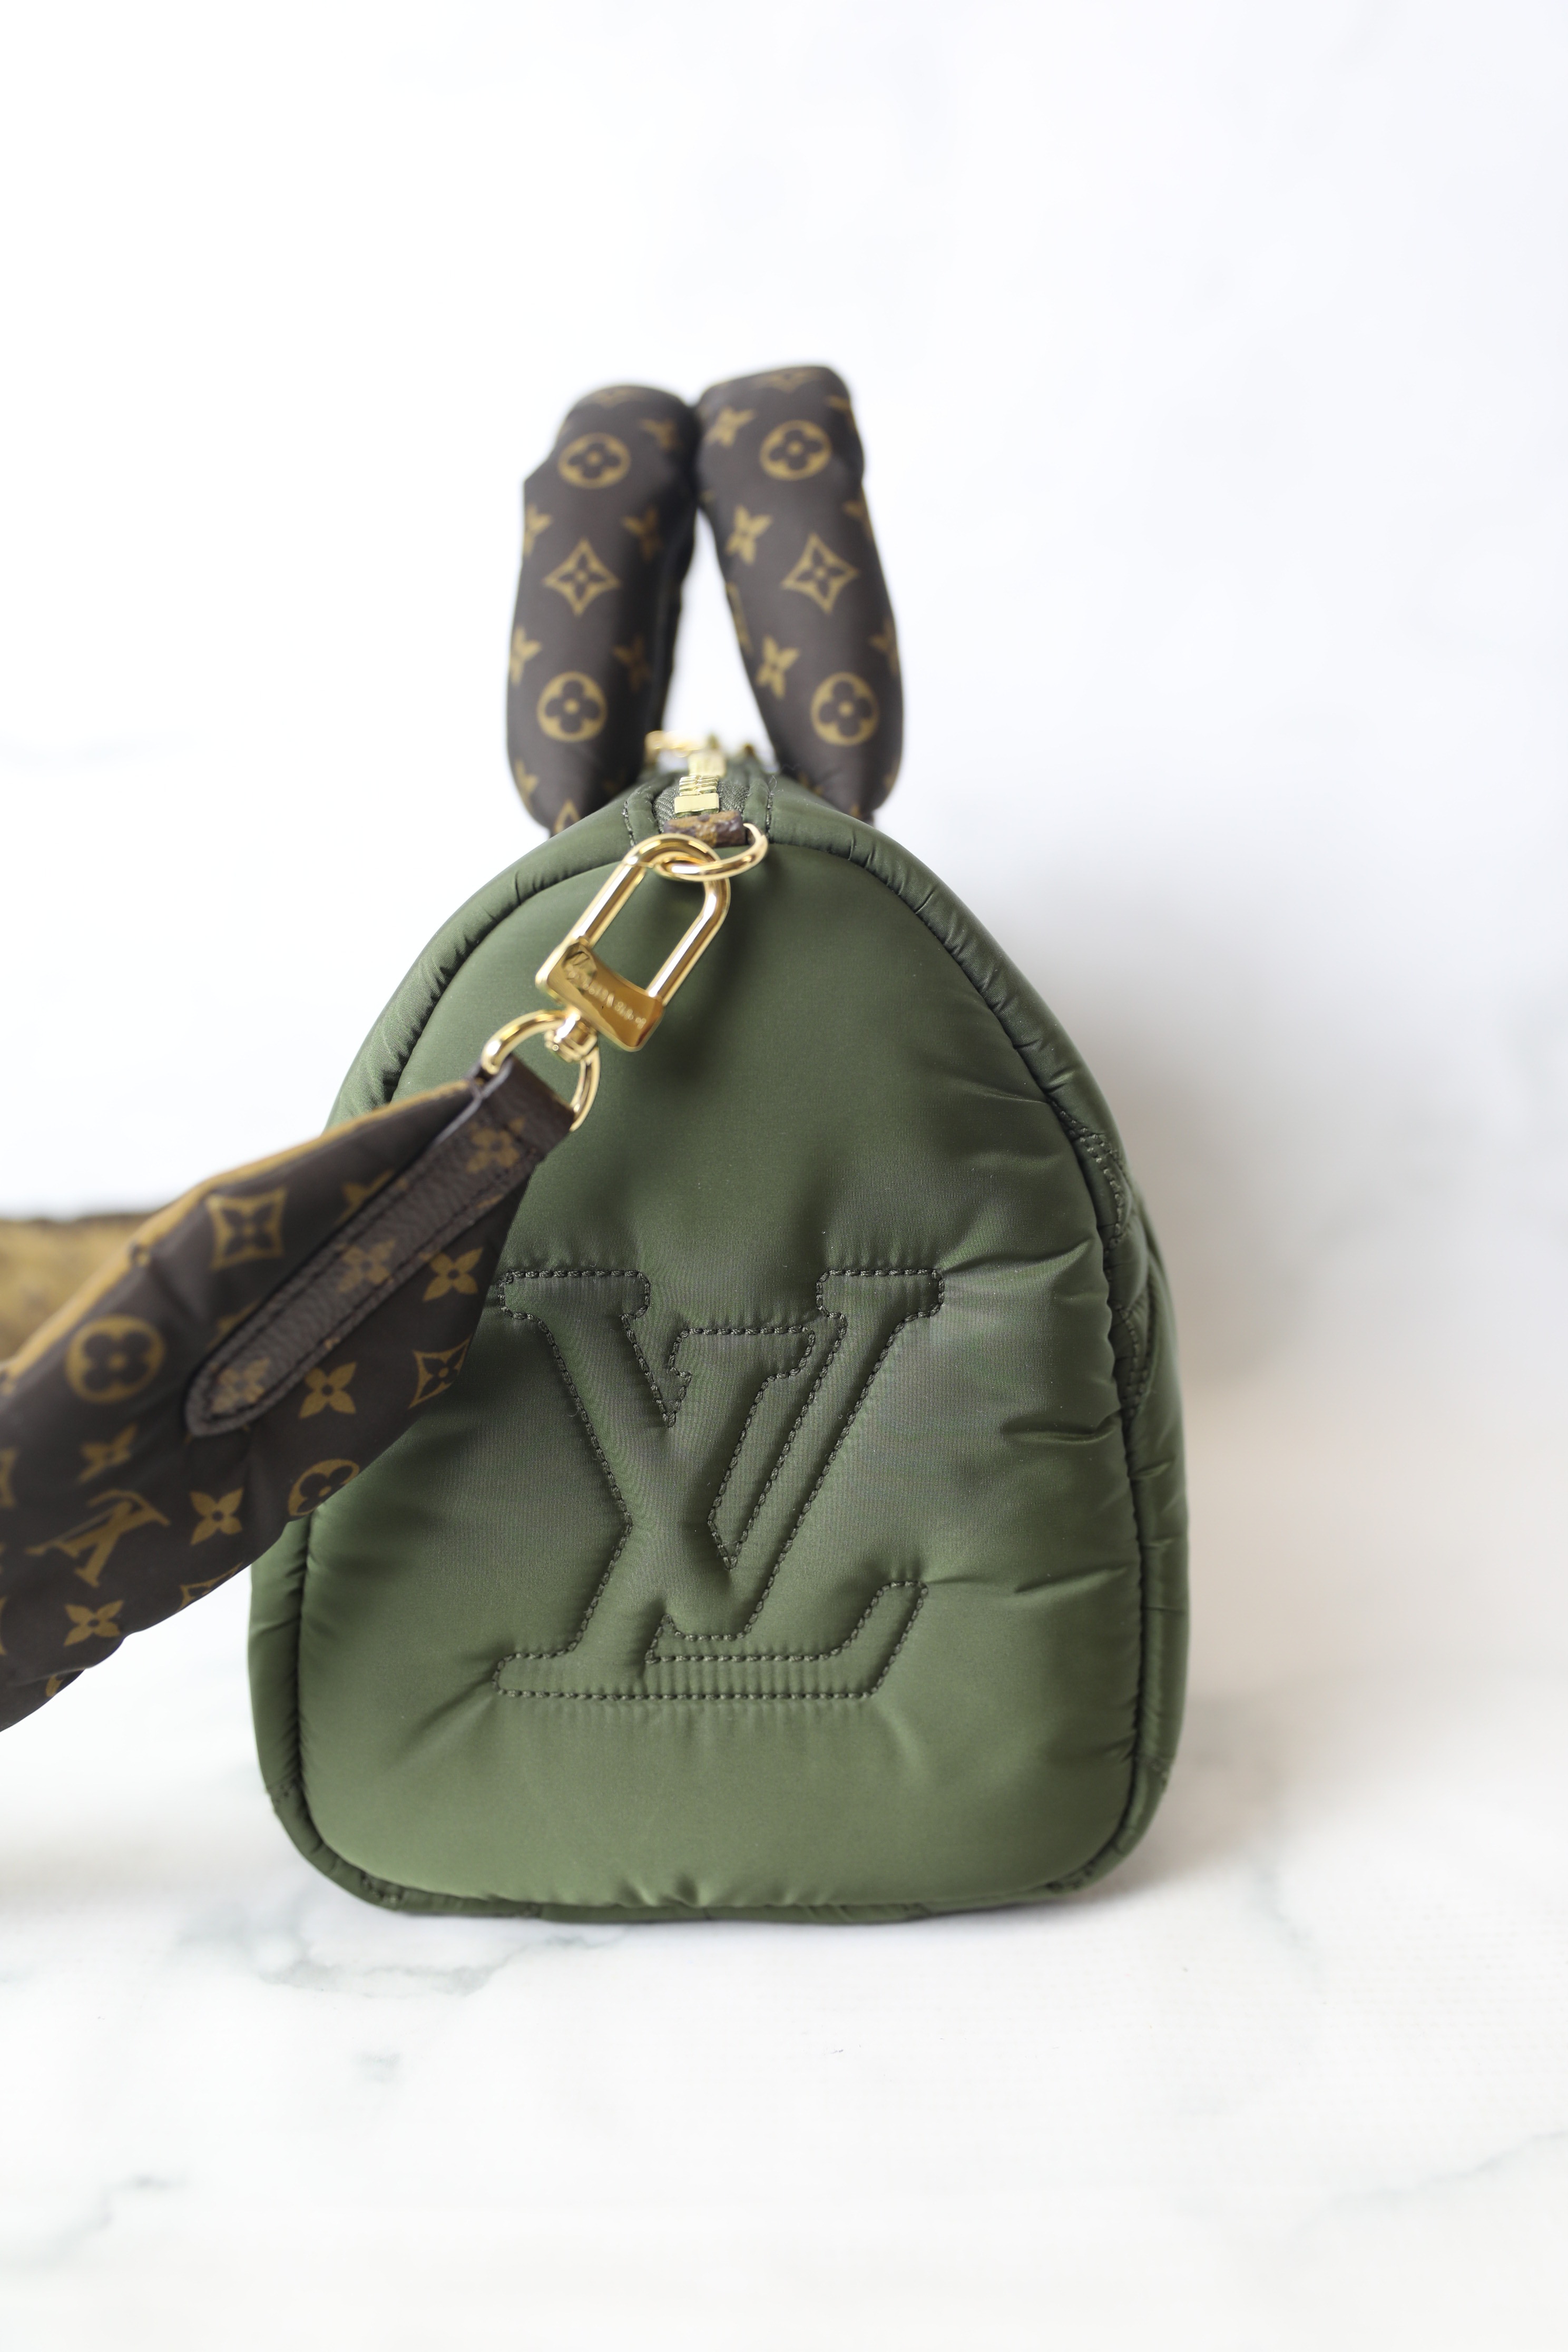 Louis Vuitton Speedy 25 Puffer Bag, Monogram Top Handle, New in Dustbag  WA001